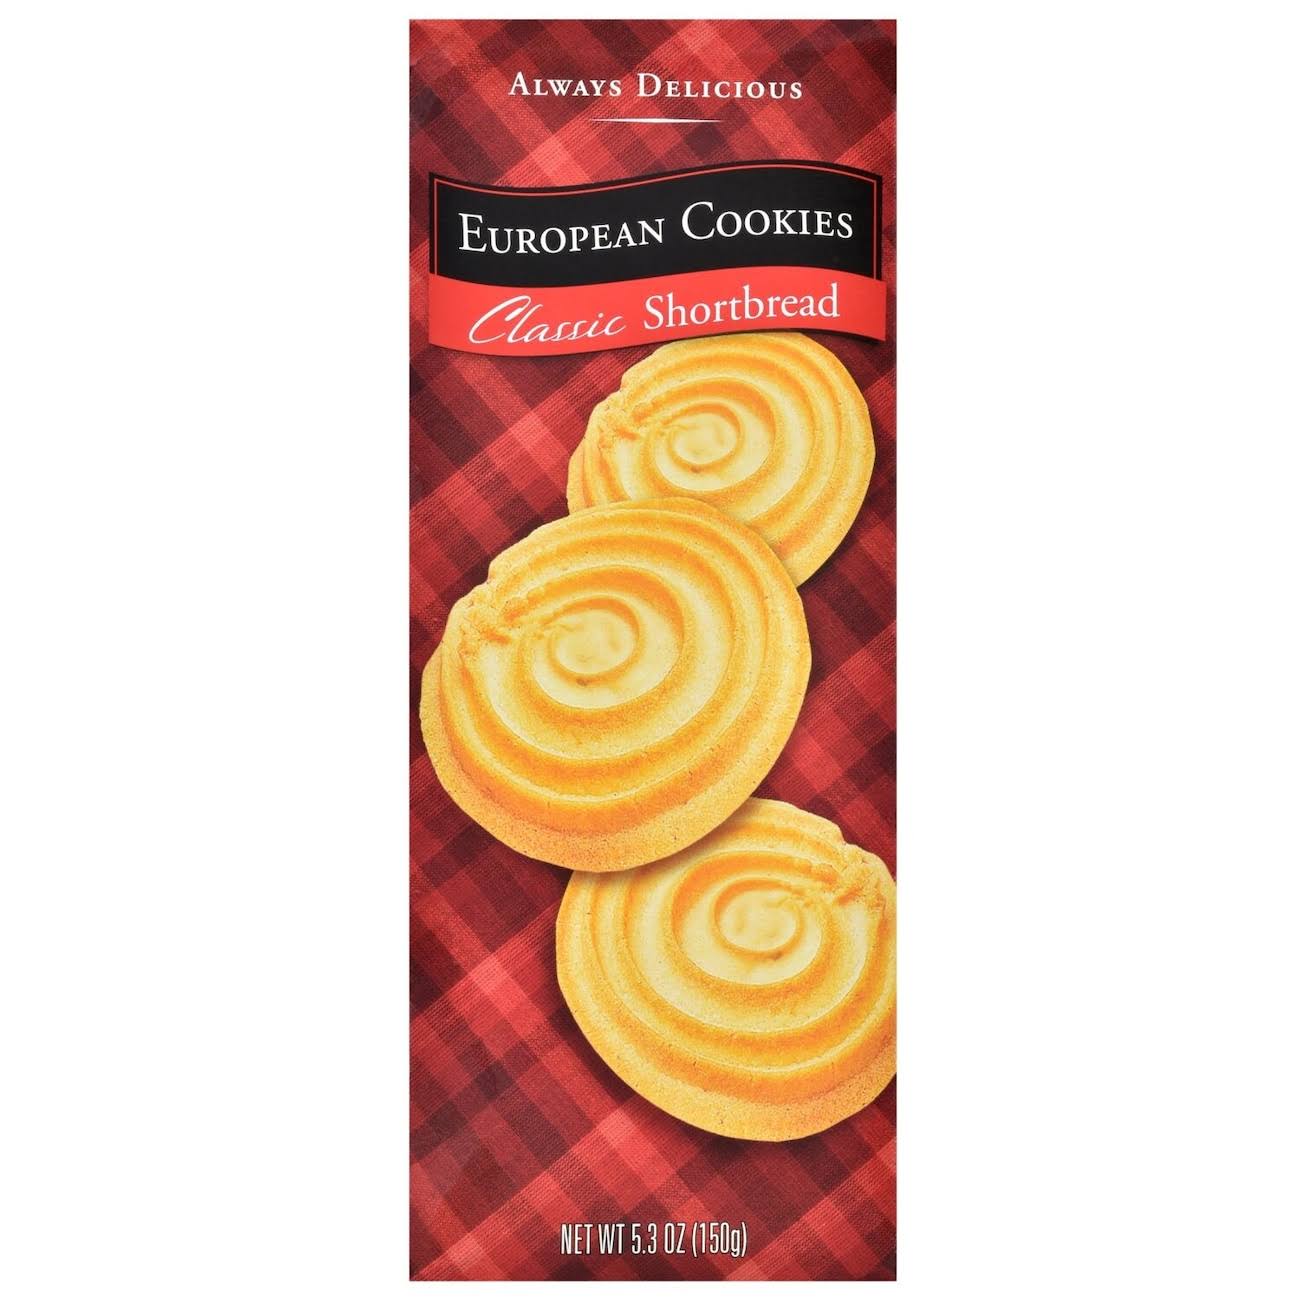 European Cookies Classic Shortbread, Two 5.3 oz. Boxes